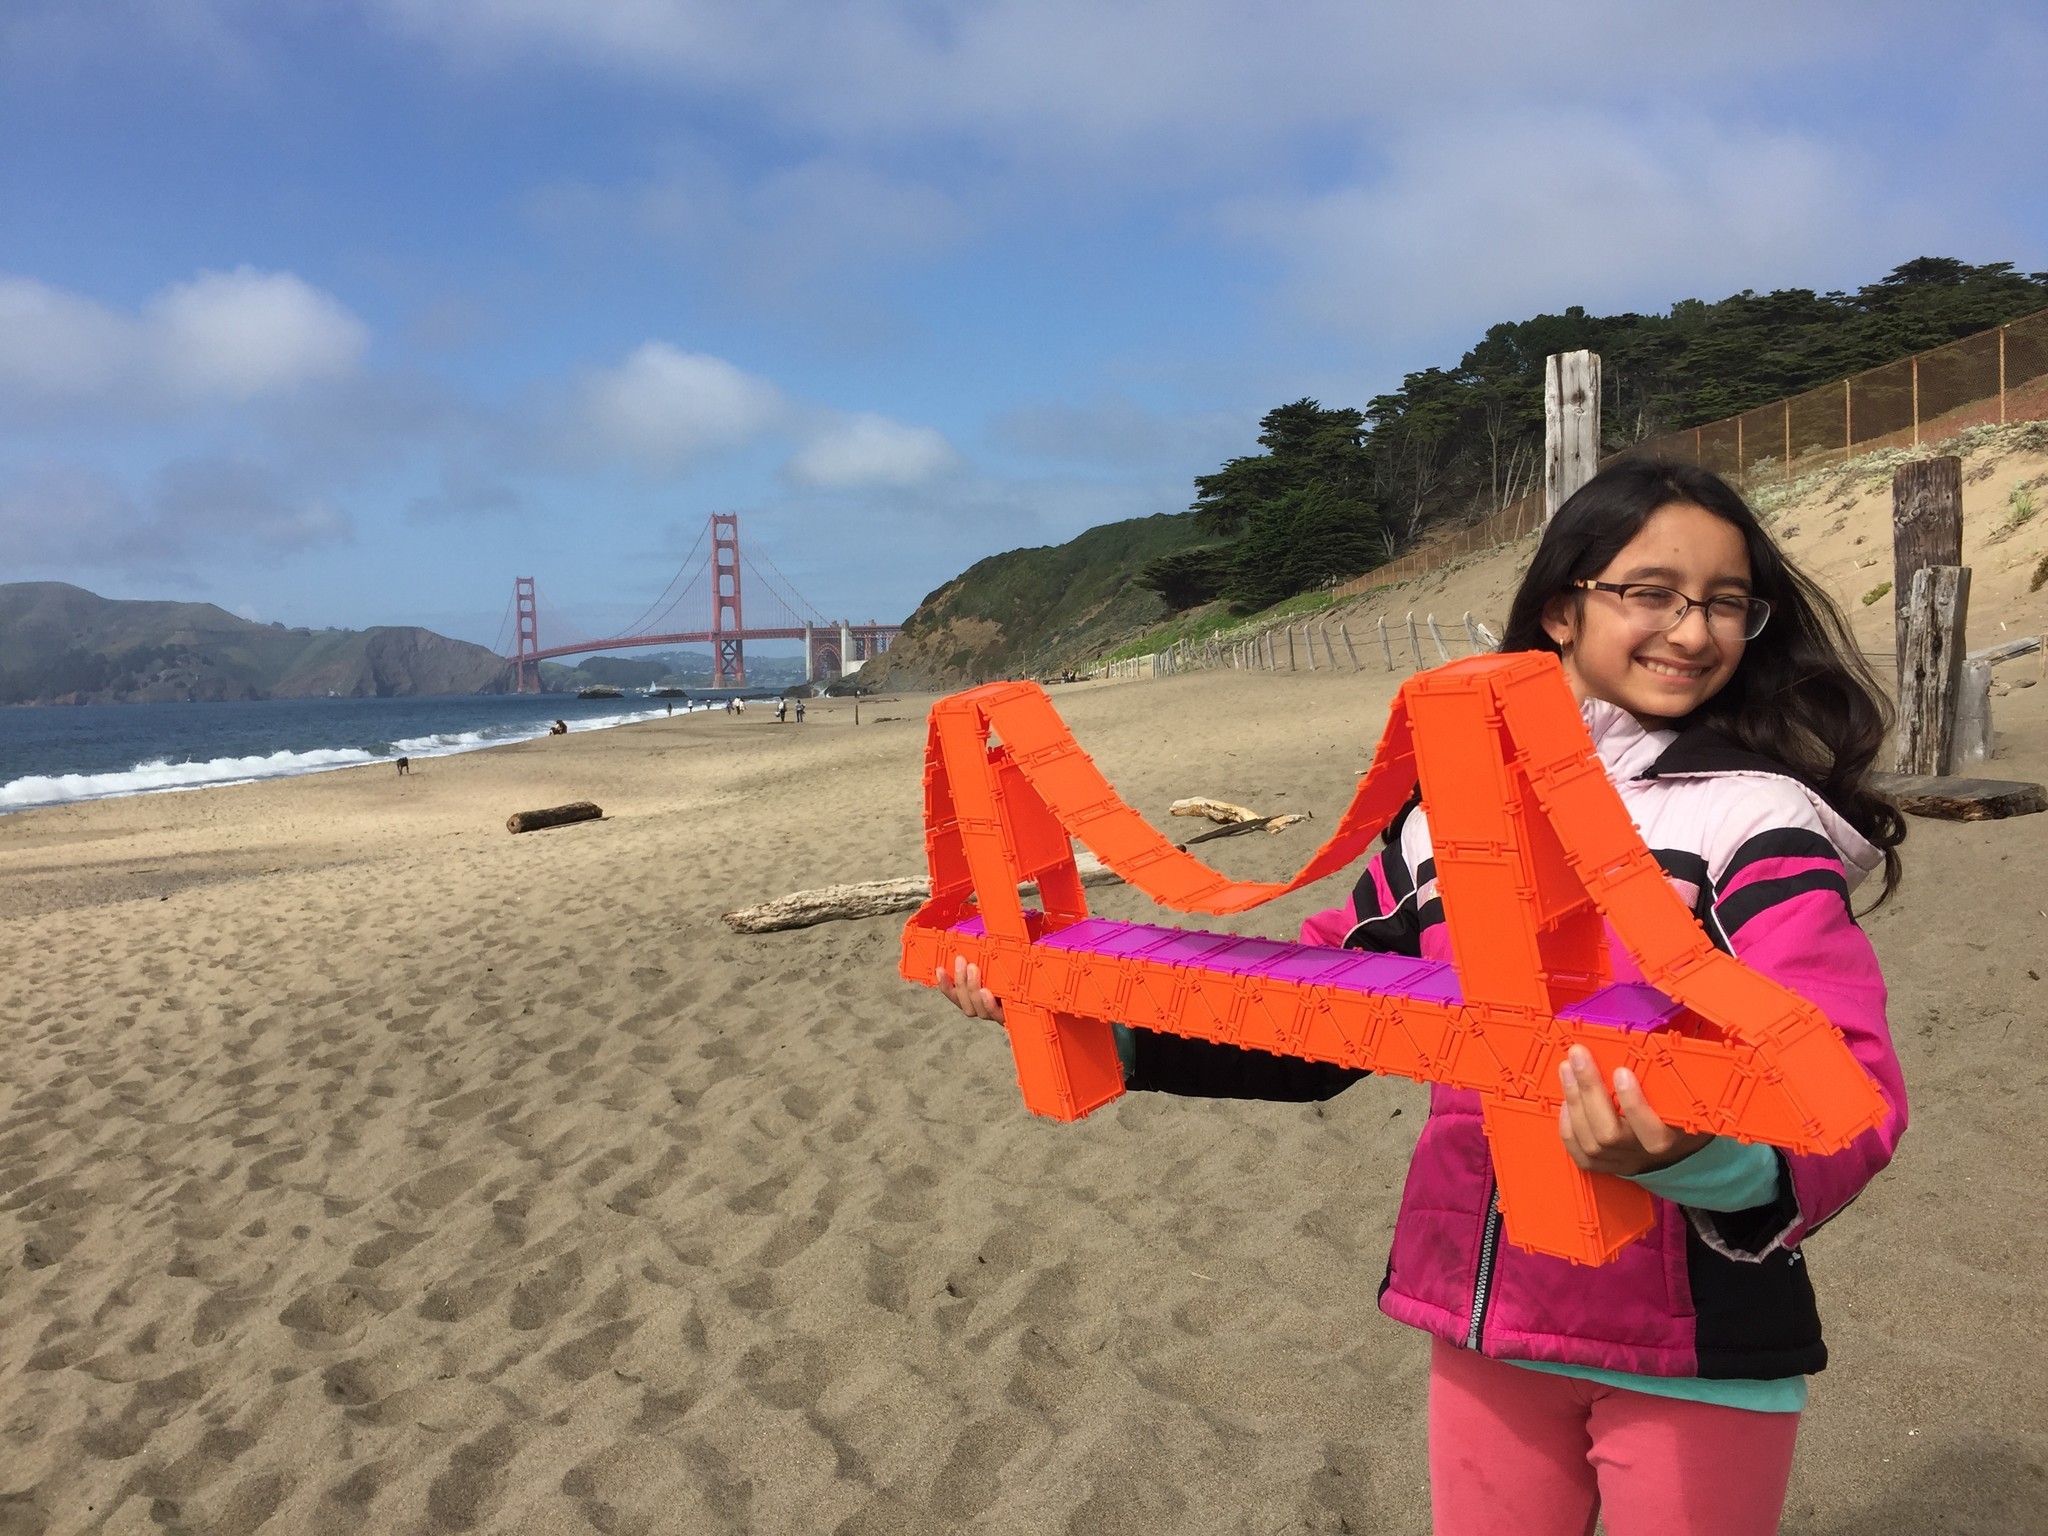 Yana Mohanty’s daughter Nina shows off a Golden Gate Bridge made of Geometiles.